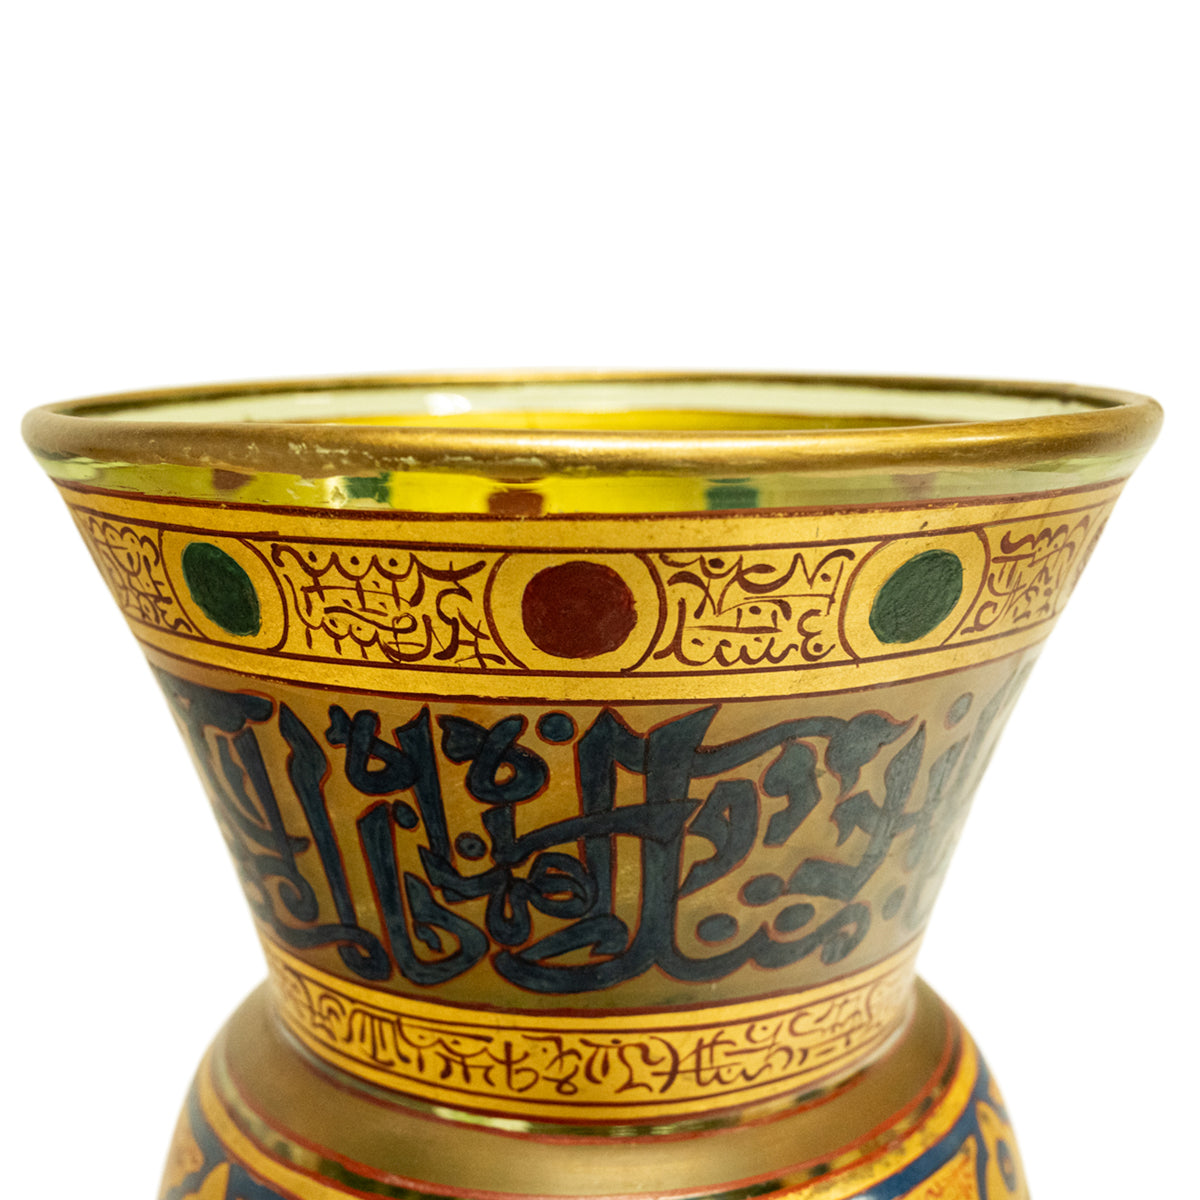 Antique French Islamic Glass Enamel Gilt Mamluk Revival Mosque Lamp Brocard 1880